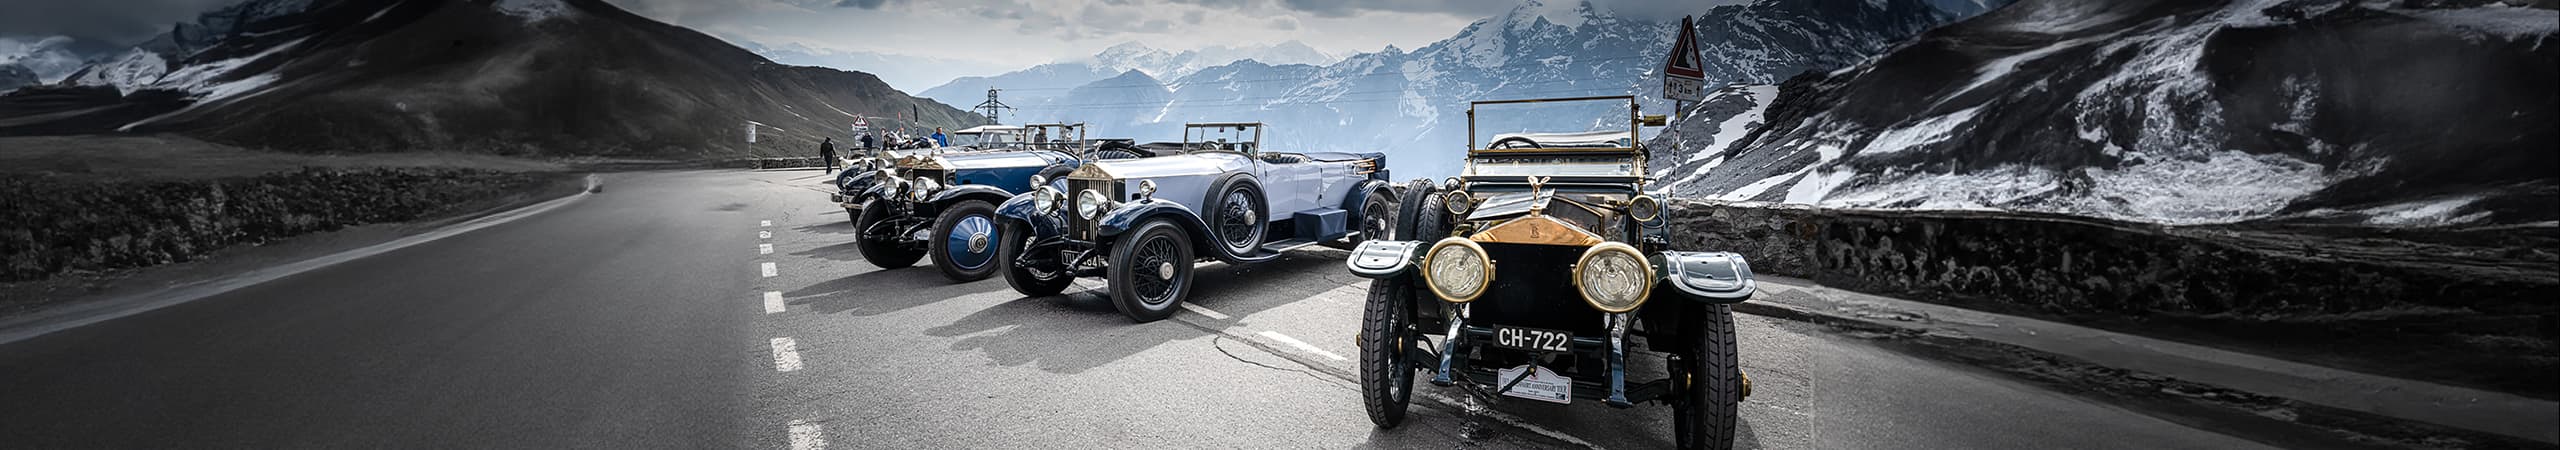 Classic Rolls-Royce cars